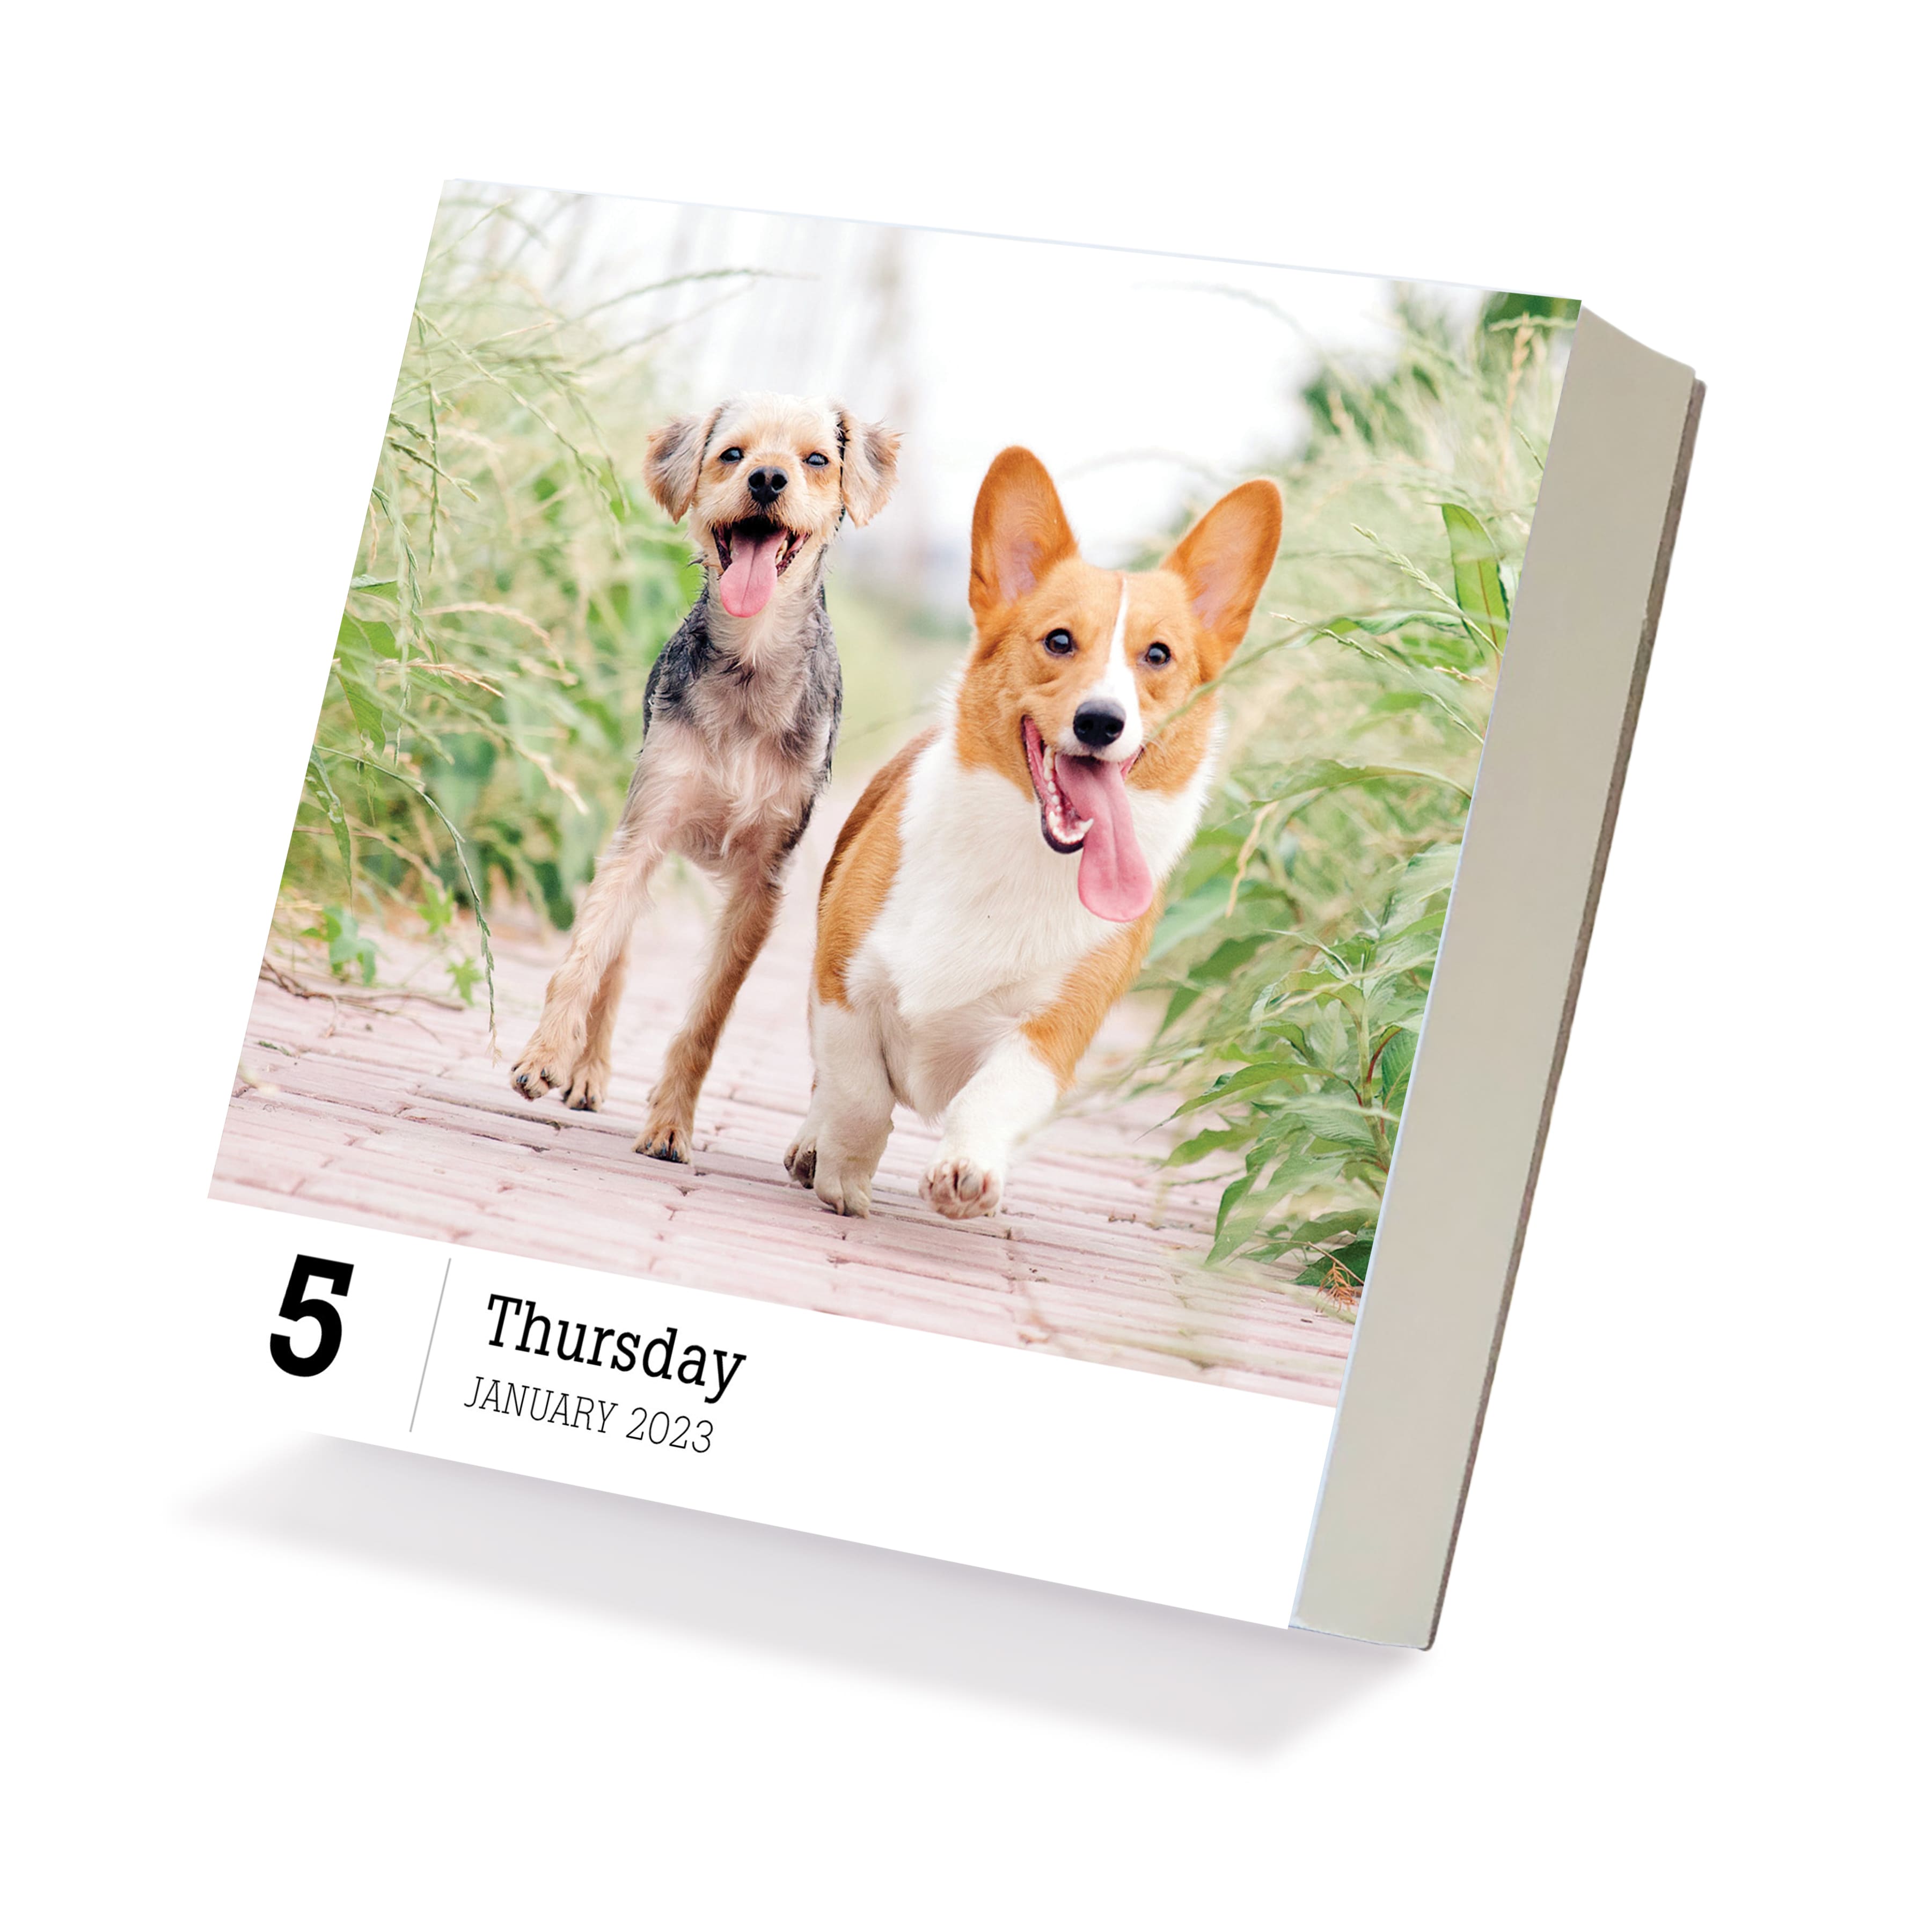 TF Publishing 2023 DogADay Daily Desktop Calendar Michaels